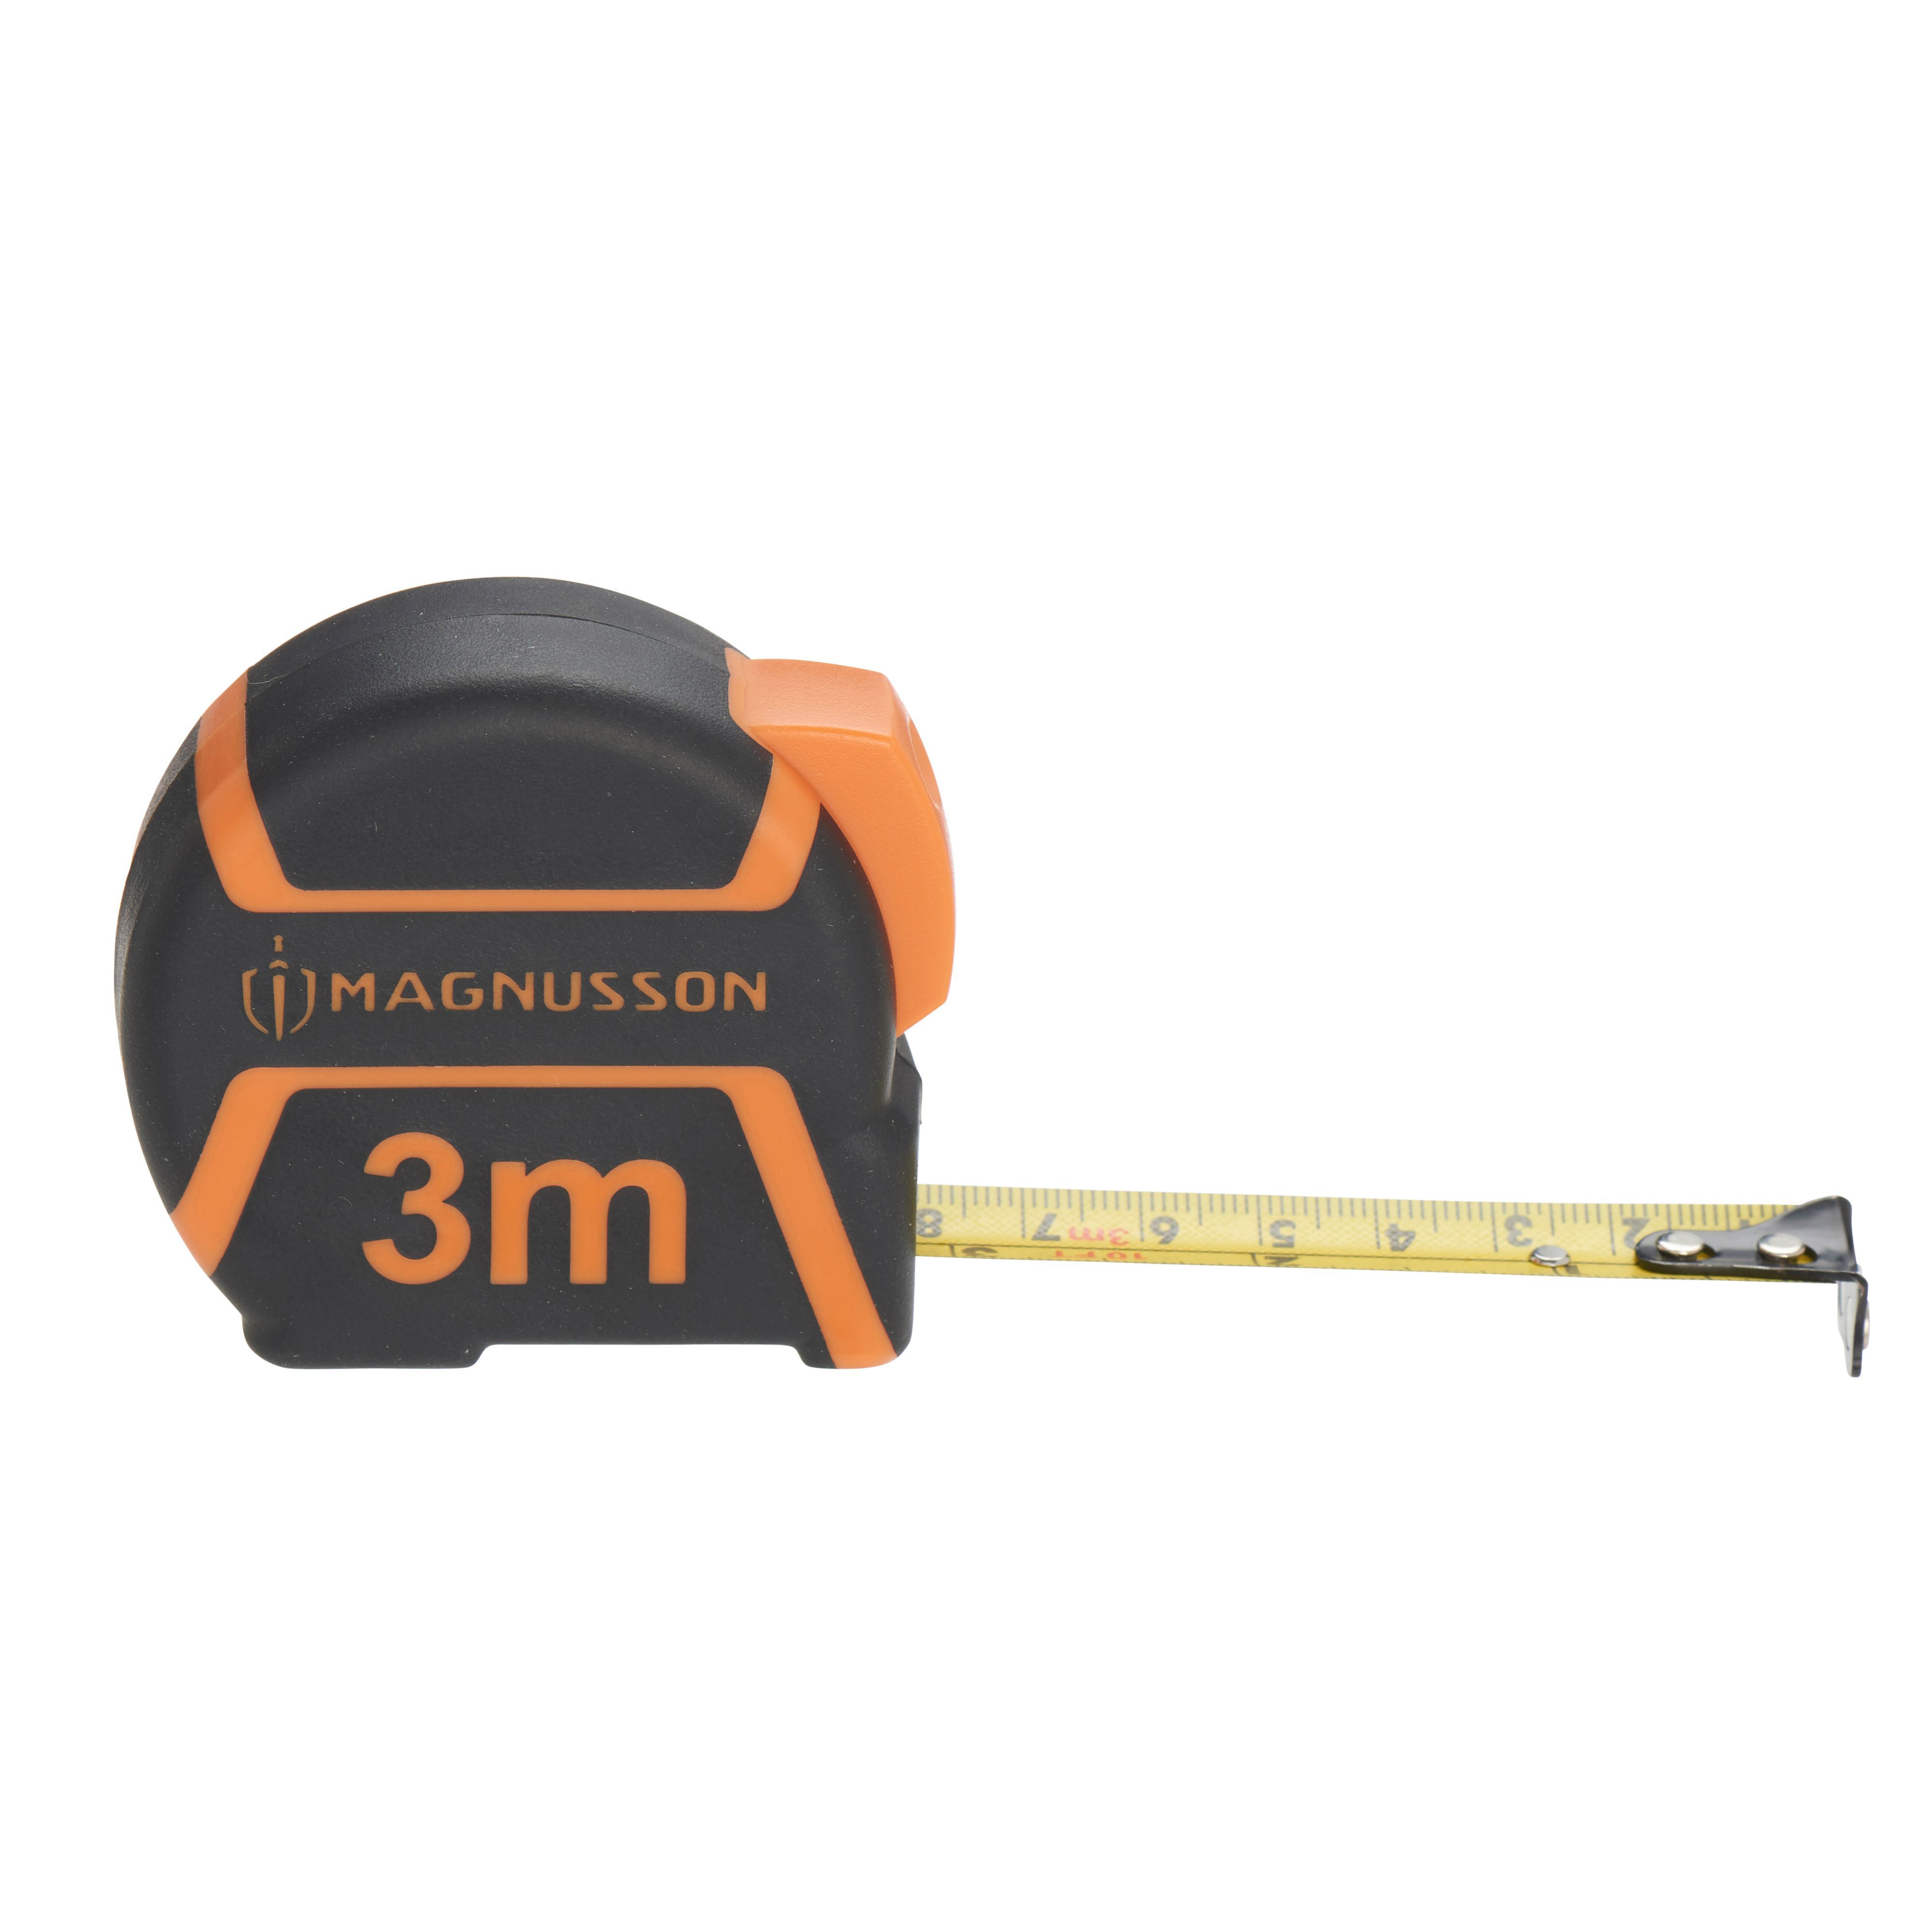 Magnusson Tape measure 3m